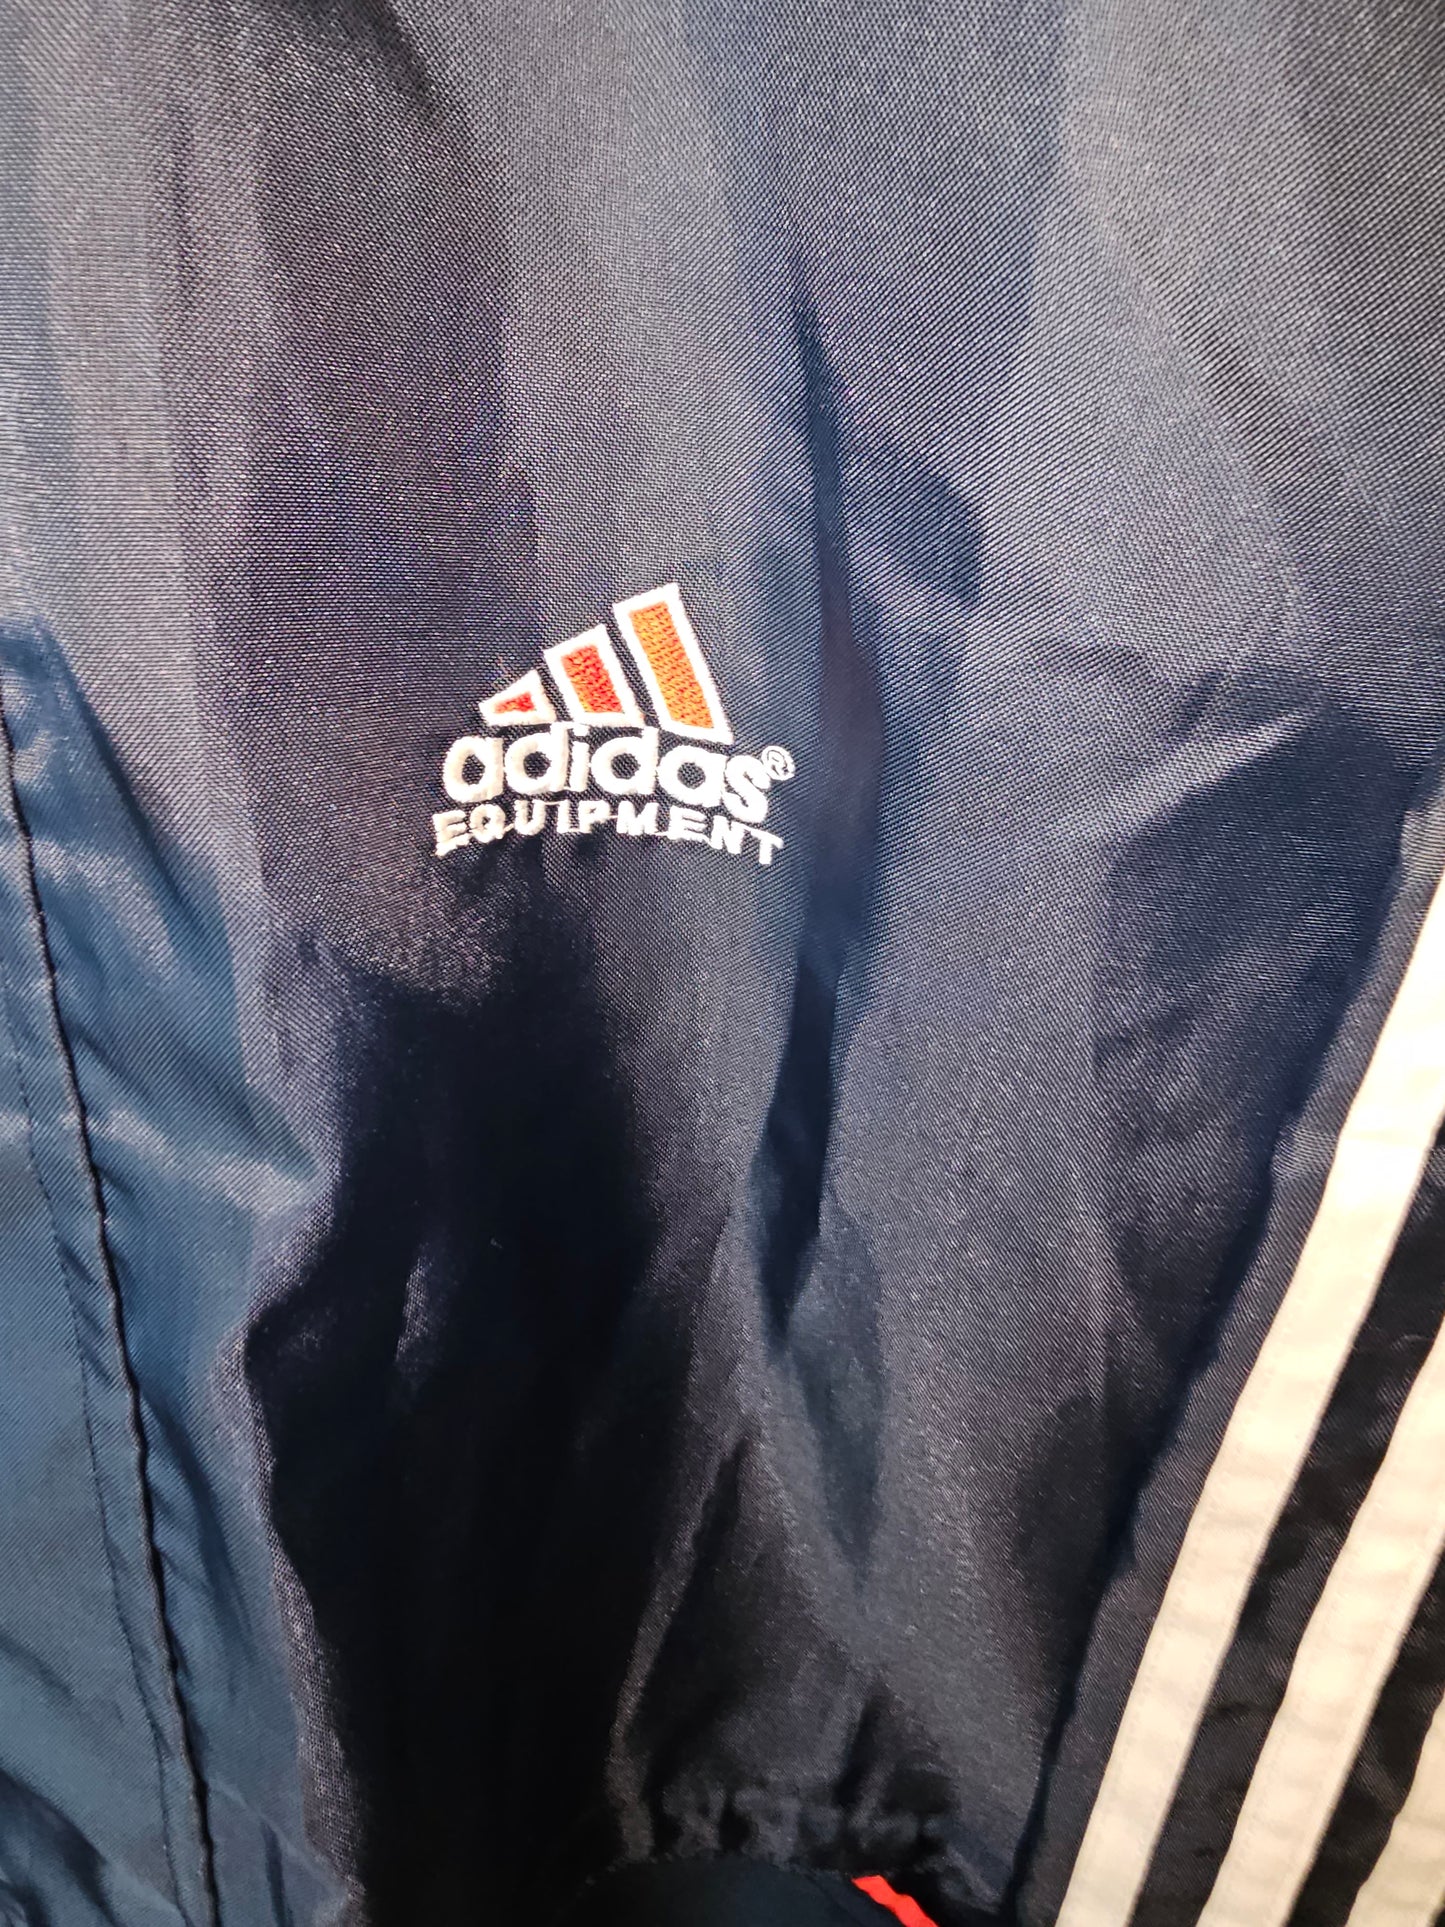 Adidas Equipment Managers Jacket (XL)